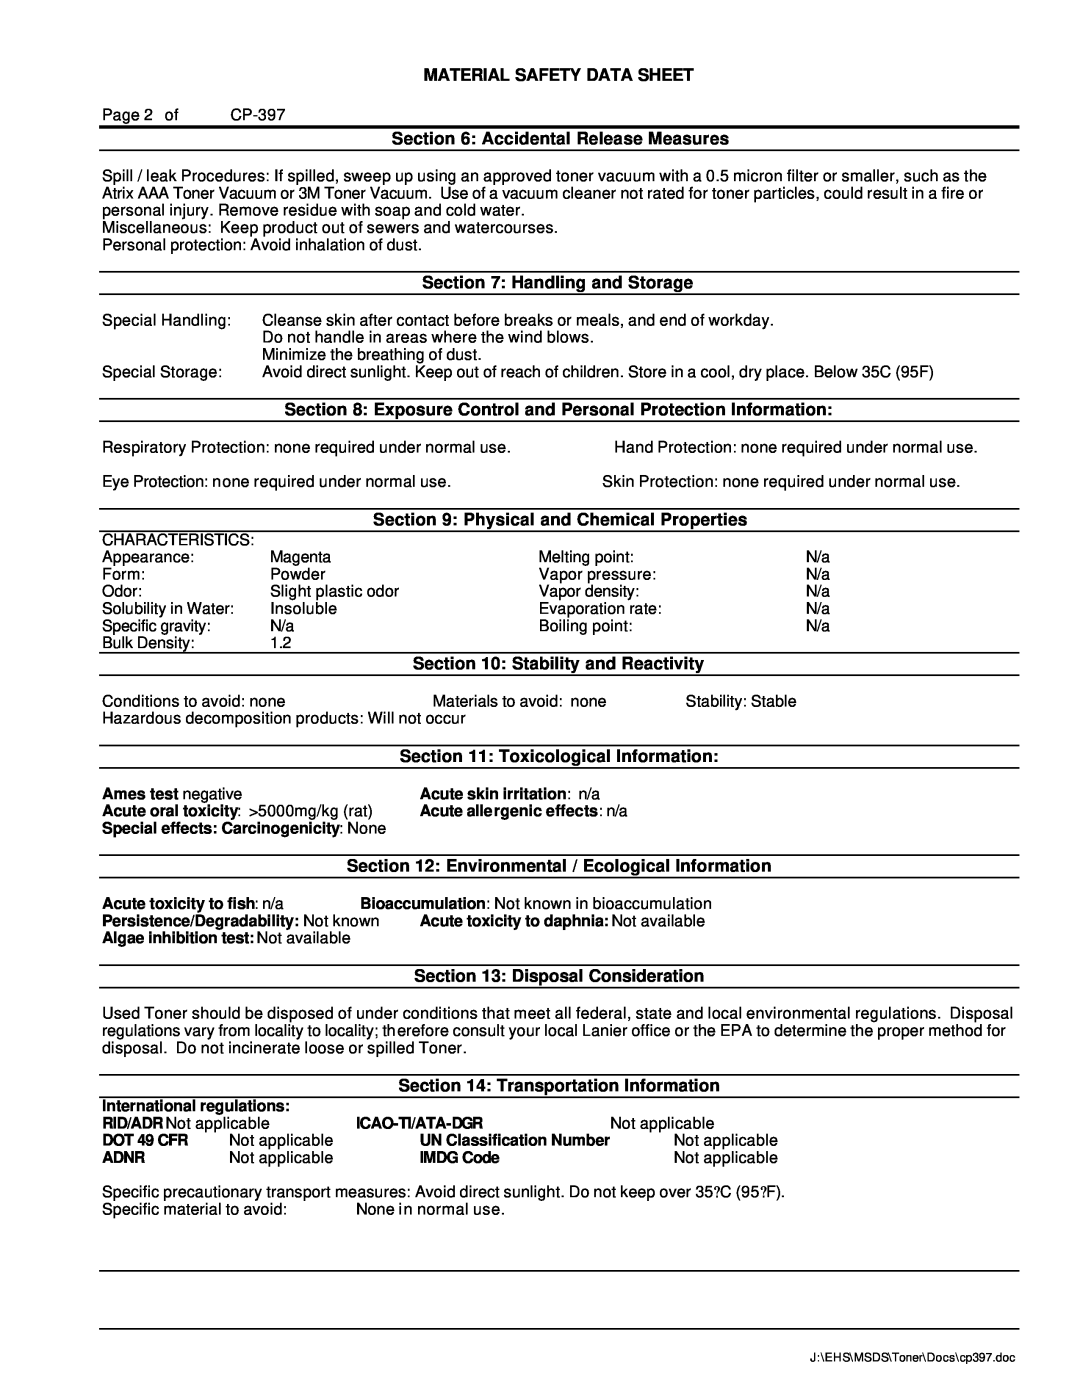 Lanier LD020C manual Material Safety Data Sheet 